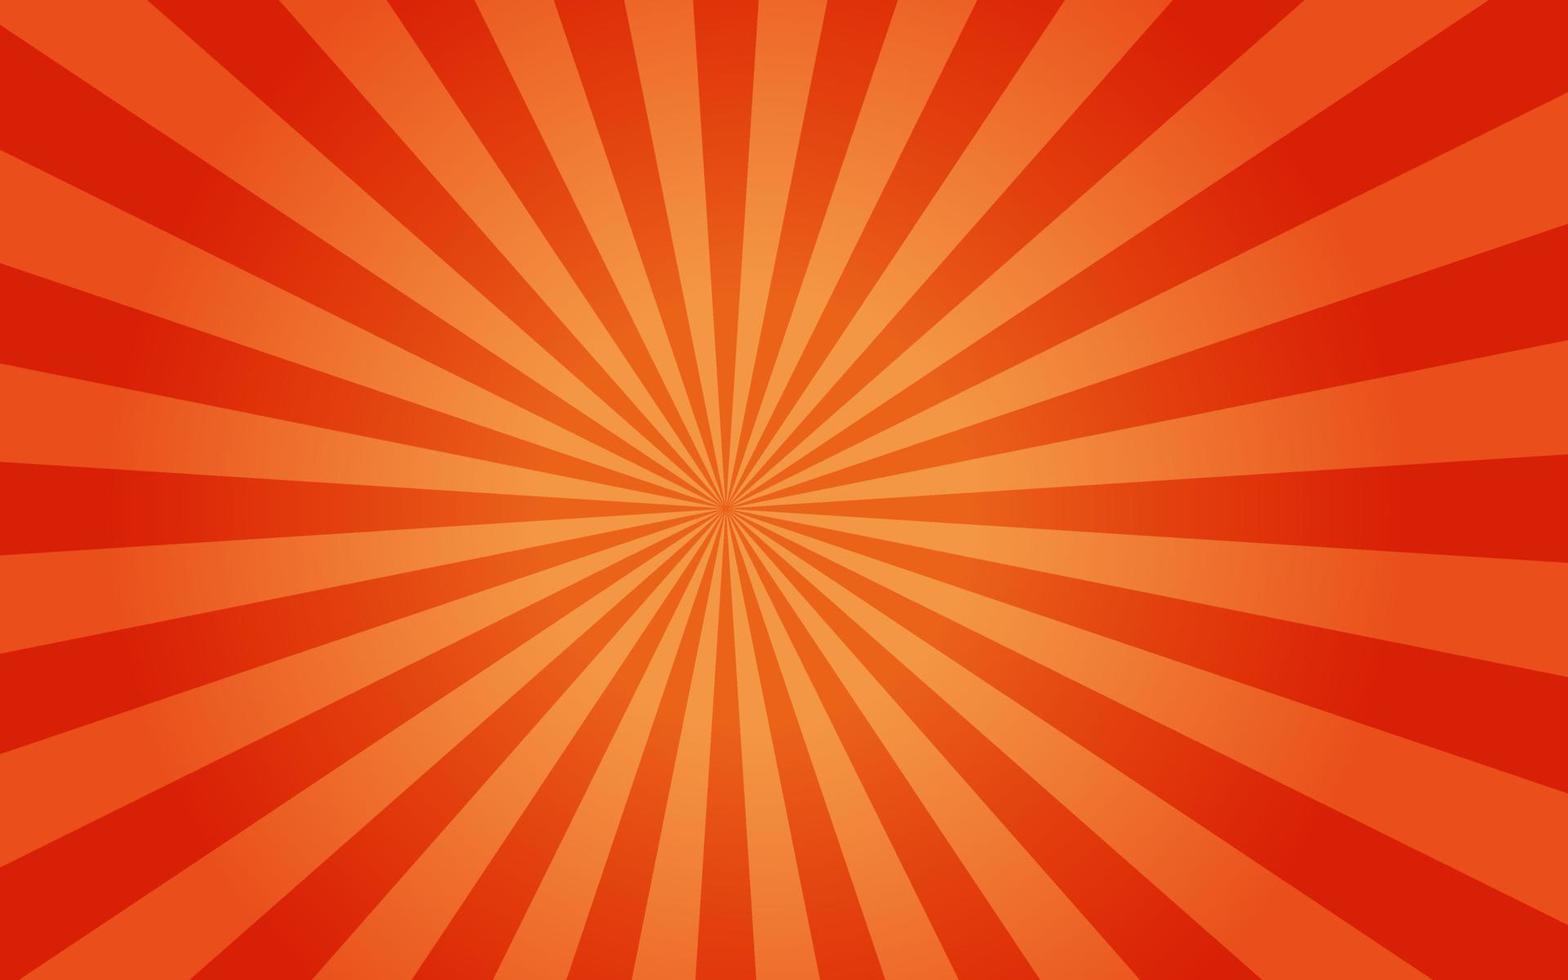 Sun rays retro vintage style on orange background, Sunburst pattern background. Rays. Summer banner vector illustration. Abstract sunburst wallpaper for template business social media advertising.